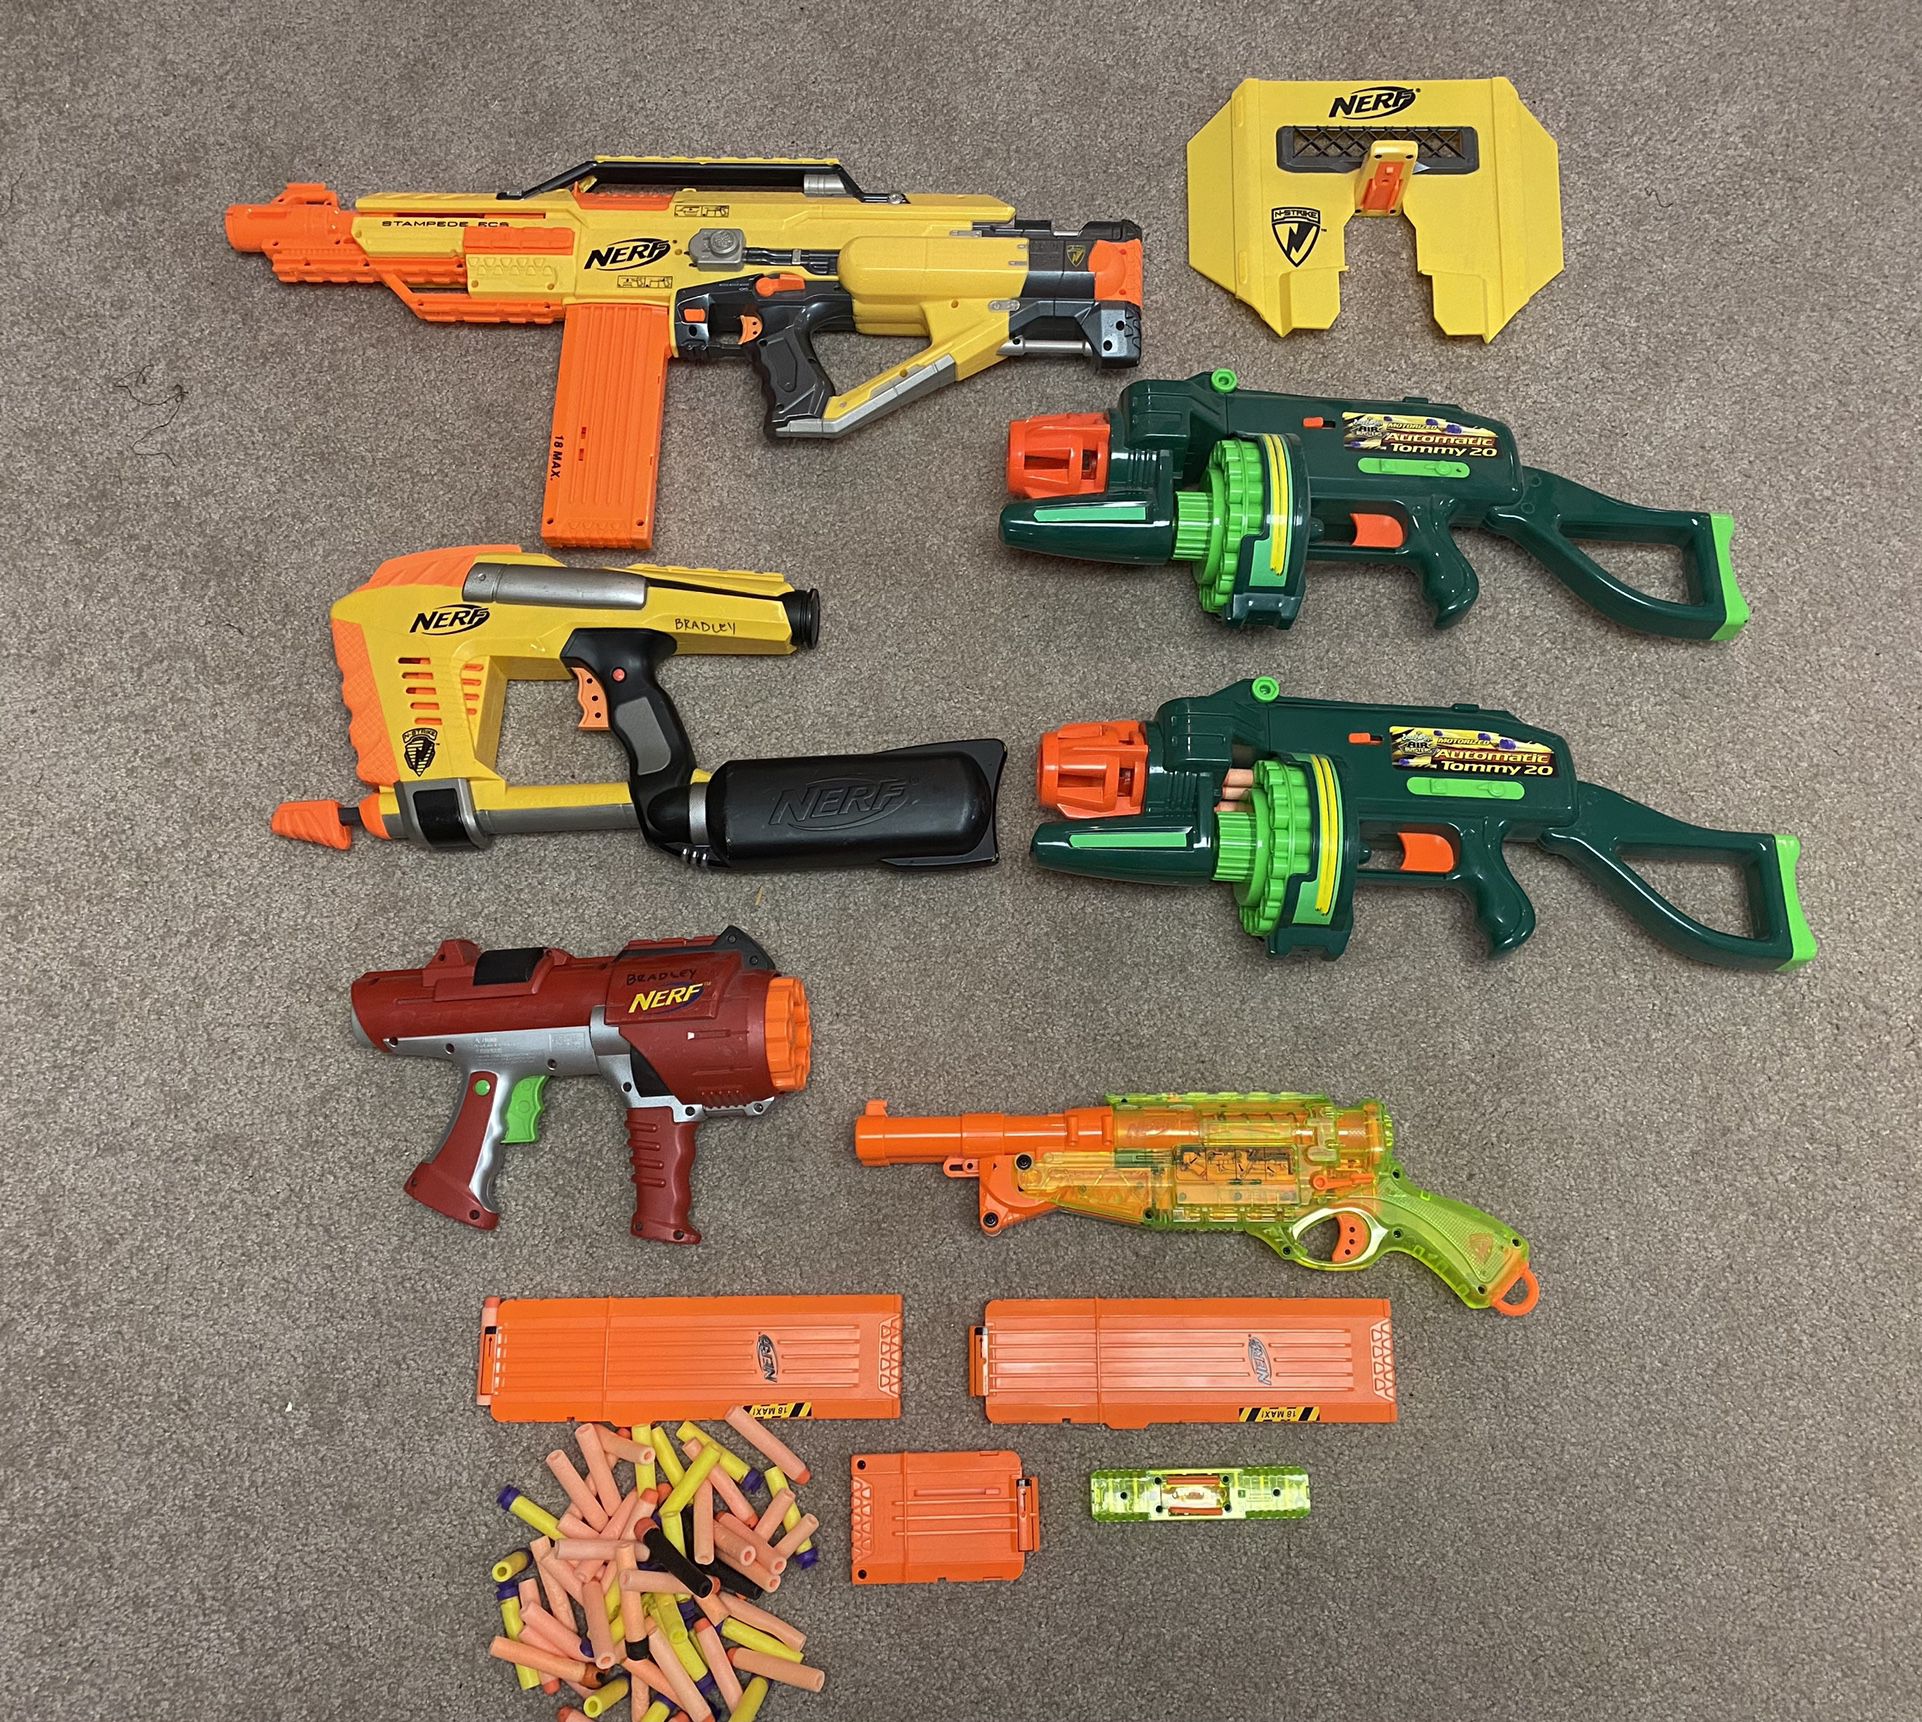 Lot of 6 Nerf Guns plus extra ammunition